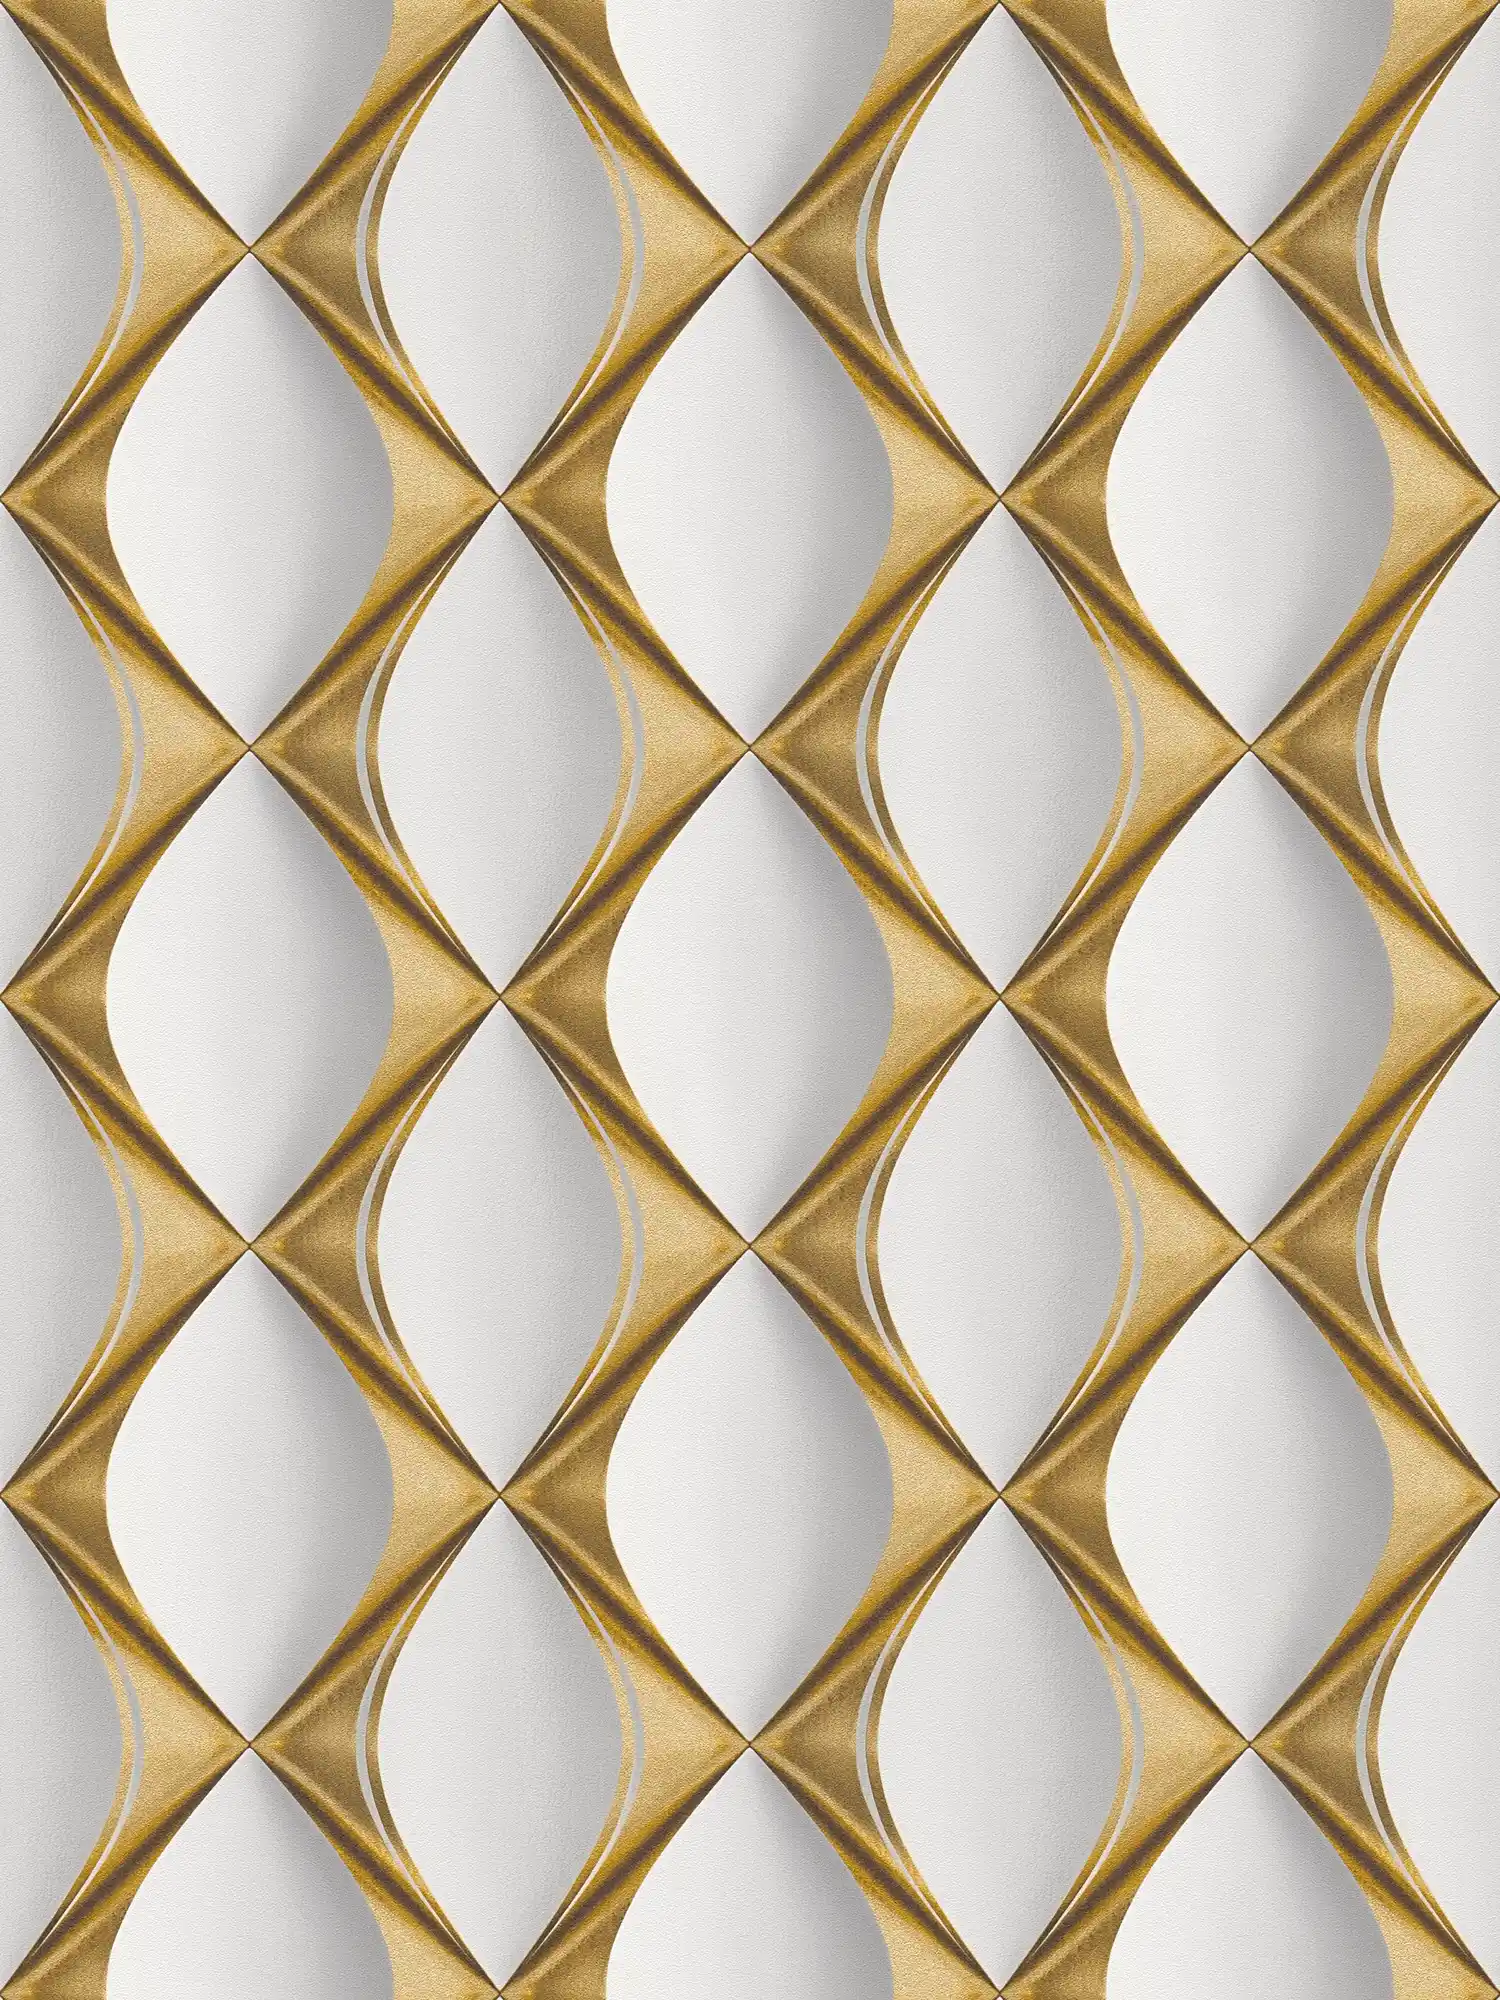 3D wallpaper golden retro pattern - white, grey, metallic
